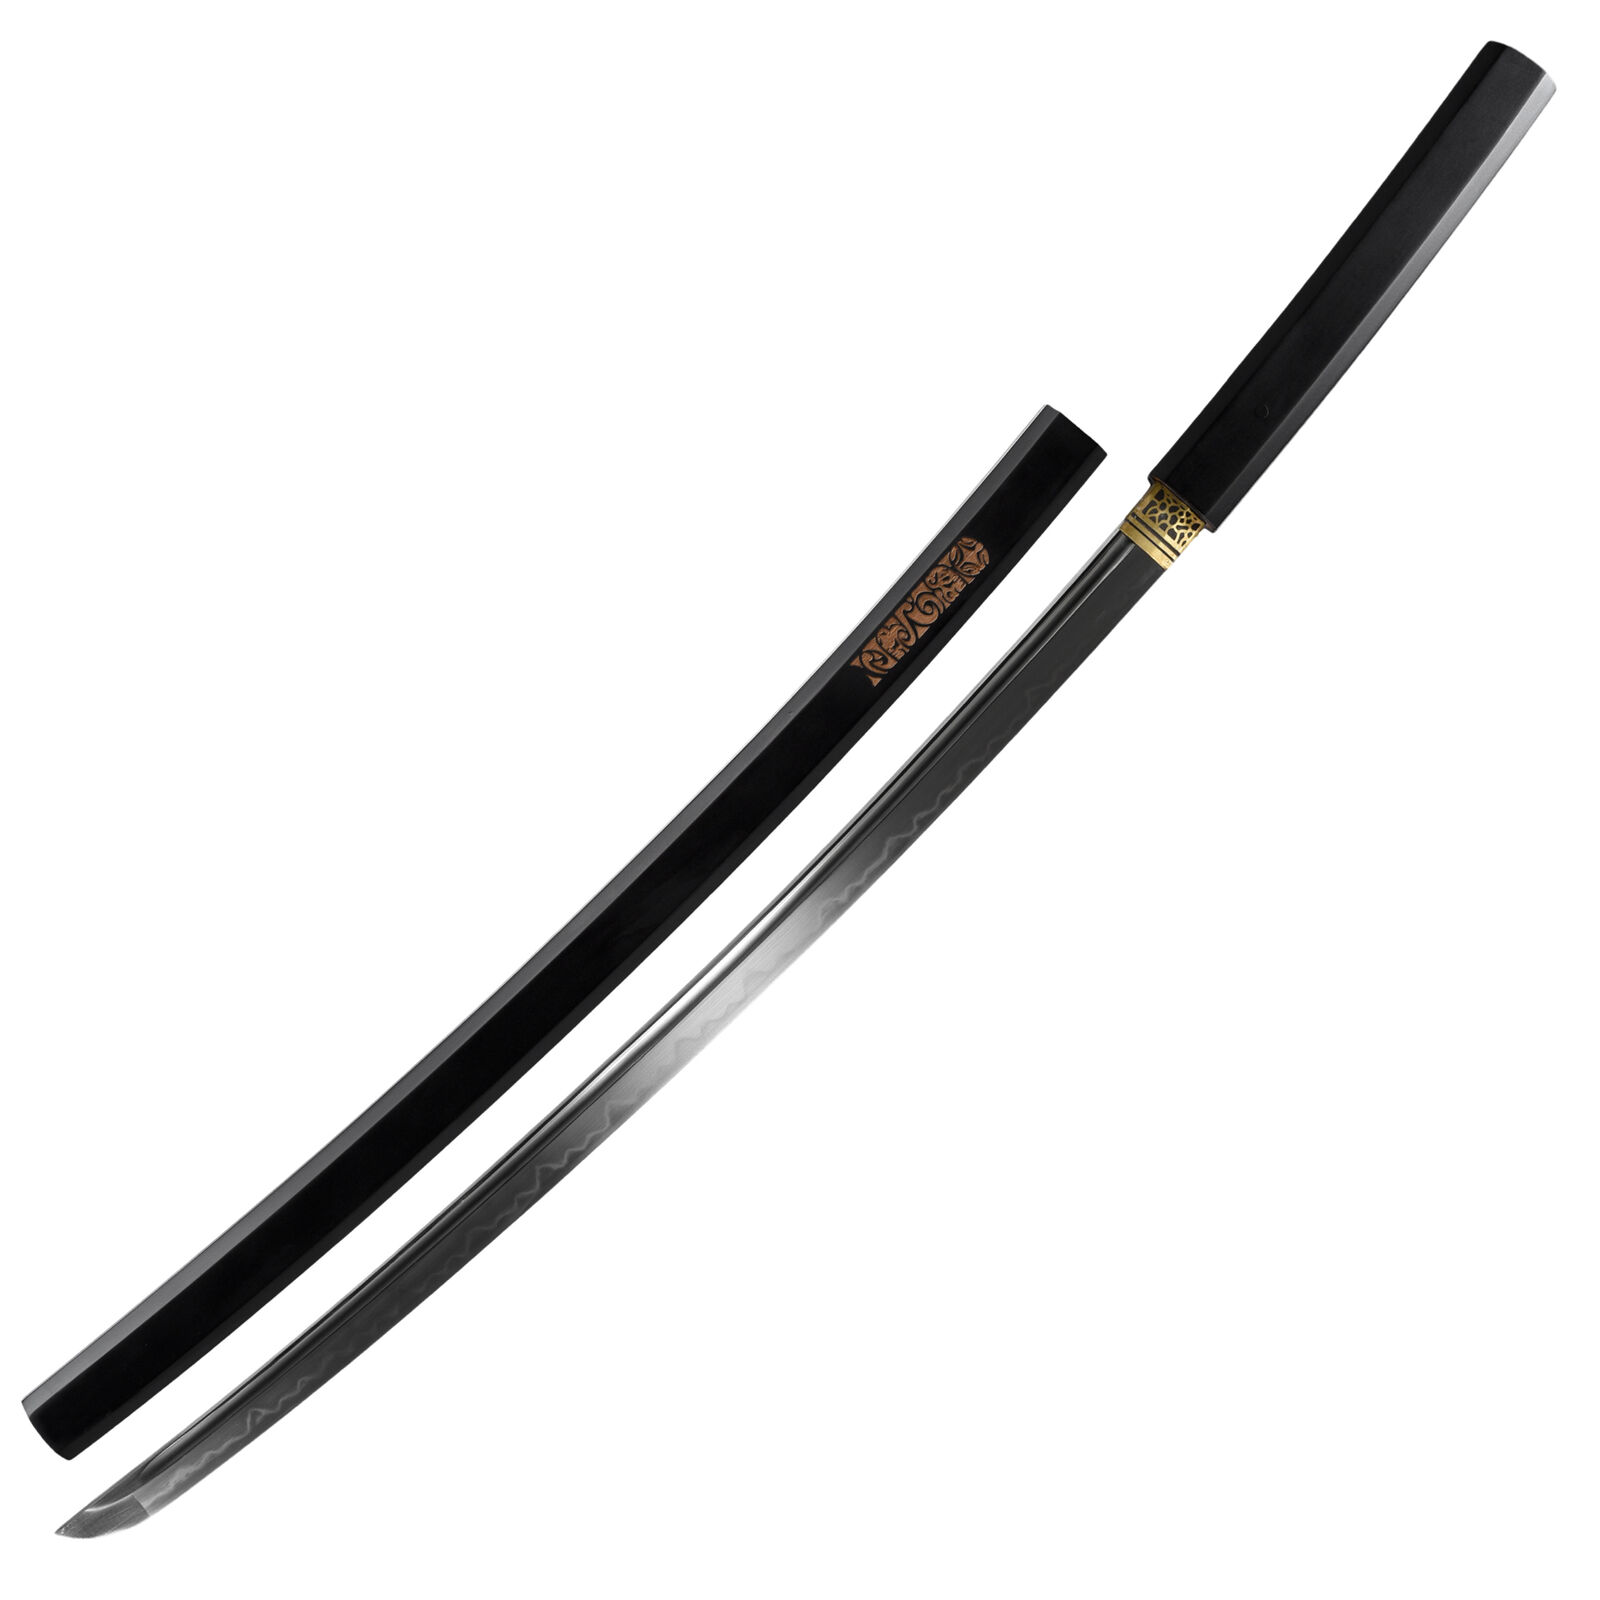 SAMURAI JAPANESE SHIRASAYA KATANA SWORD FULL TANG CLAY TEMPERED T10 CARBON STEEL